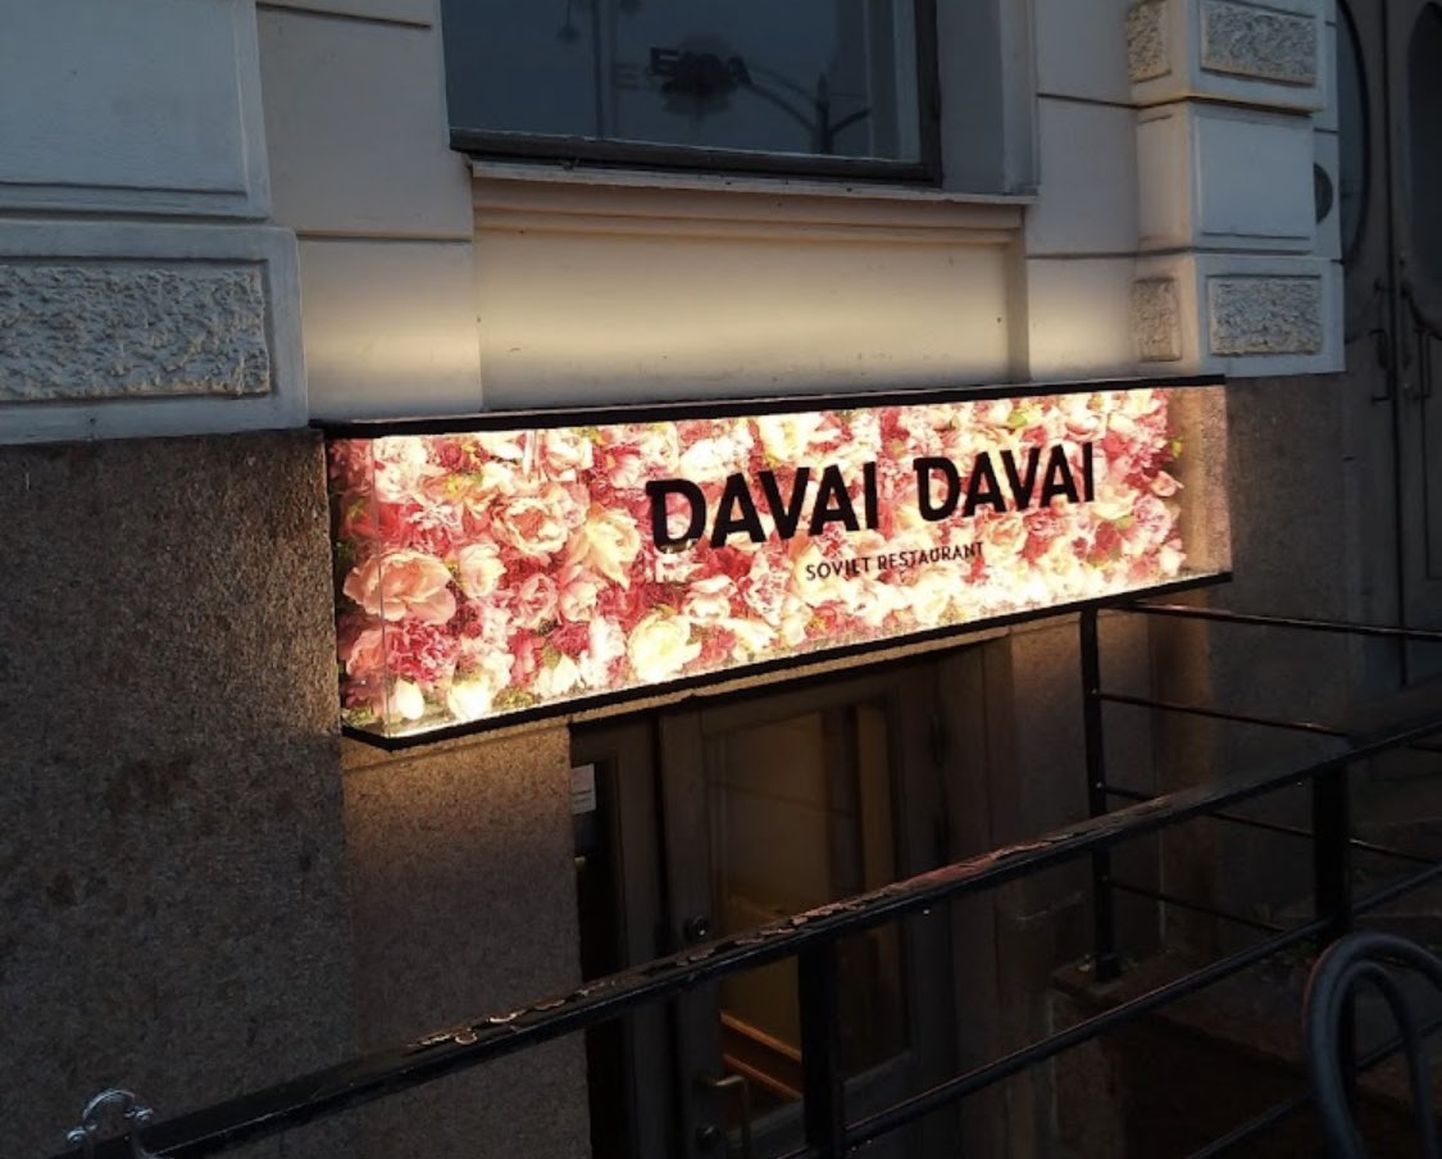 Padomju virtuves restorāns "Davai Davai" Helsinkos.